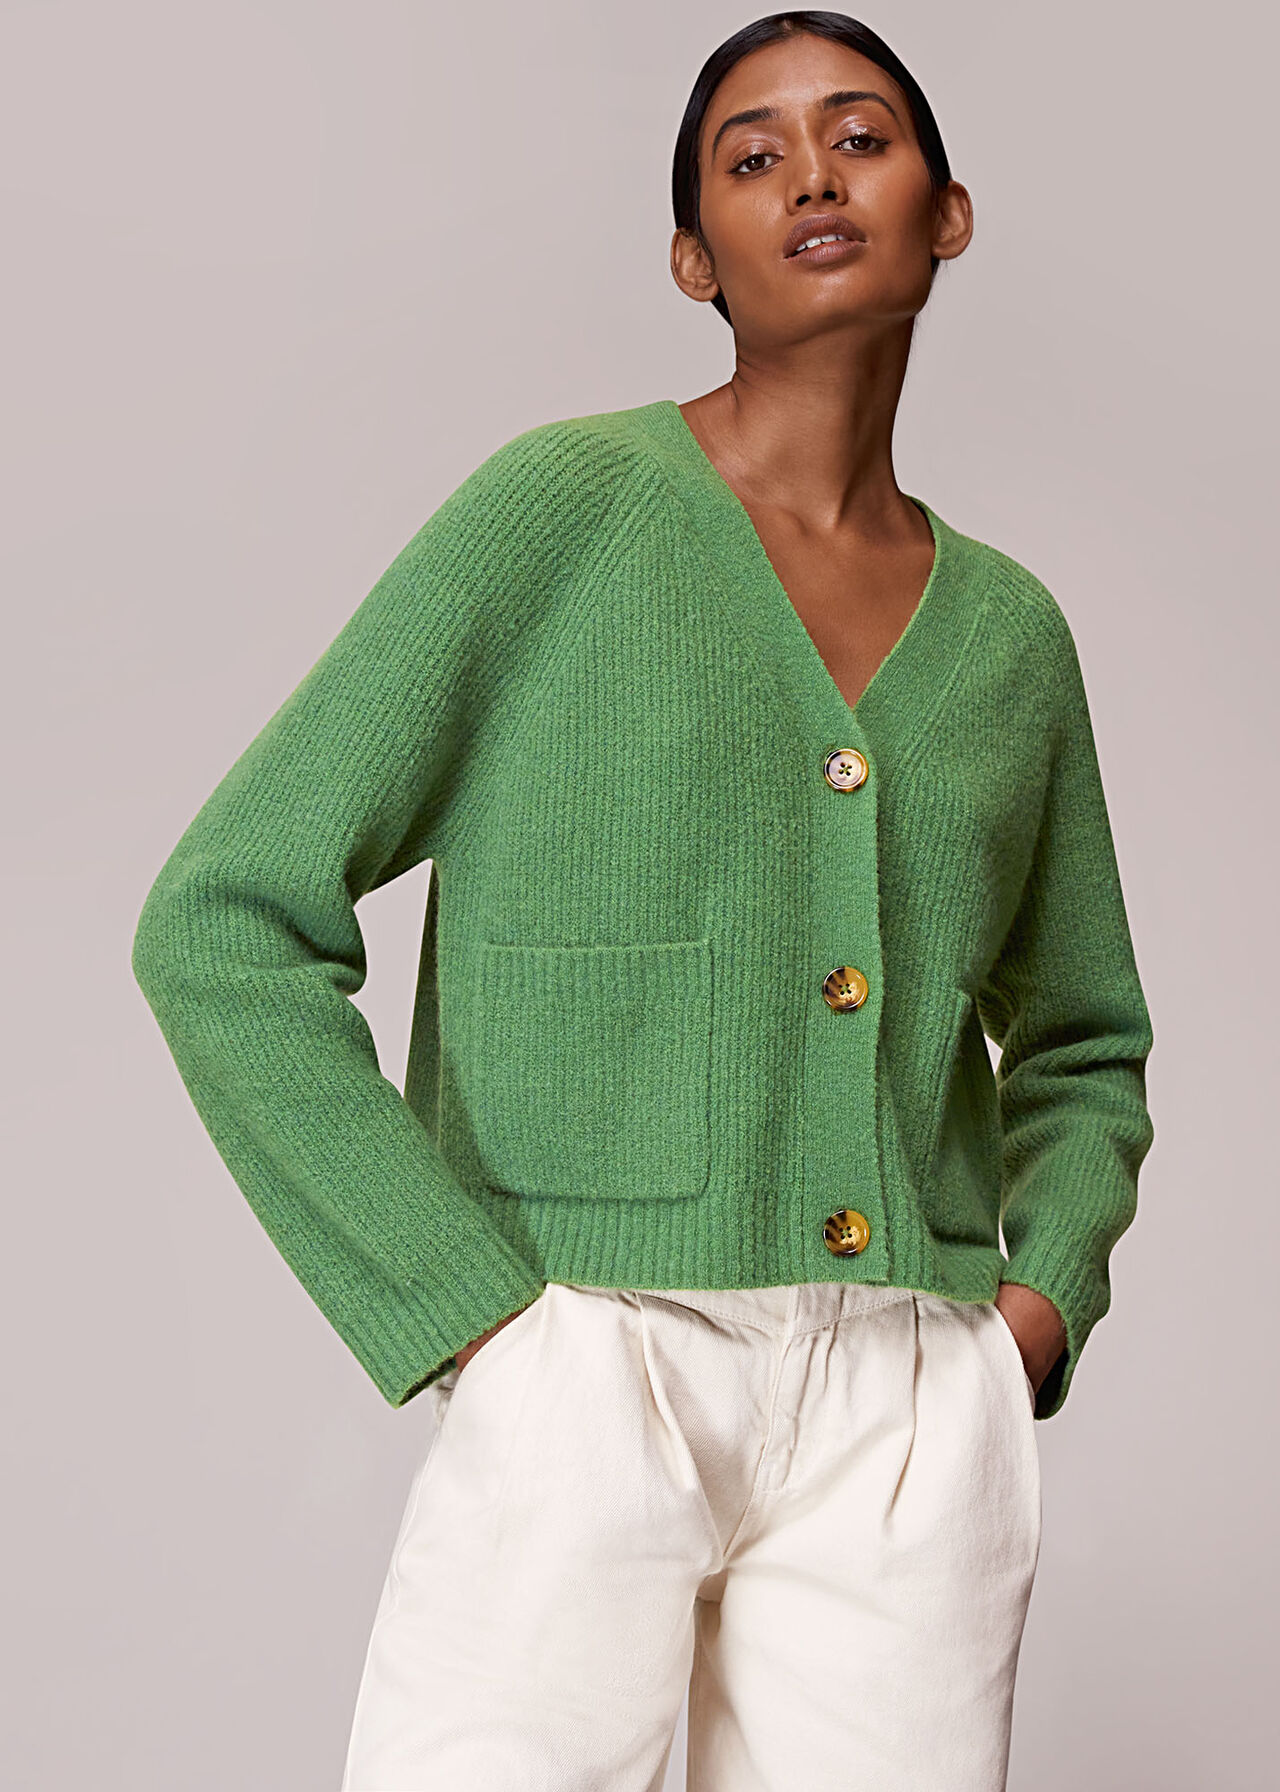 Women's Ribbed Cardigan Pocket Solid Knit Sweater Jacket, Cardigan